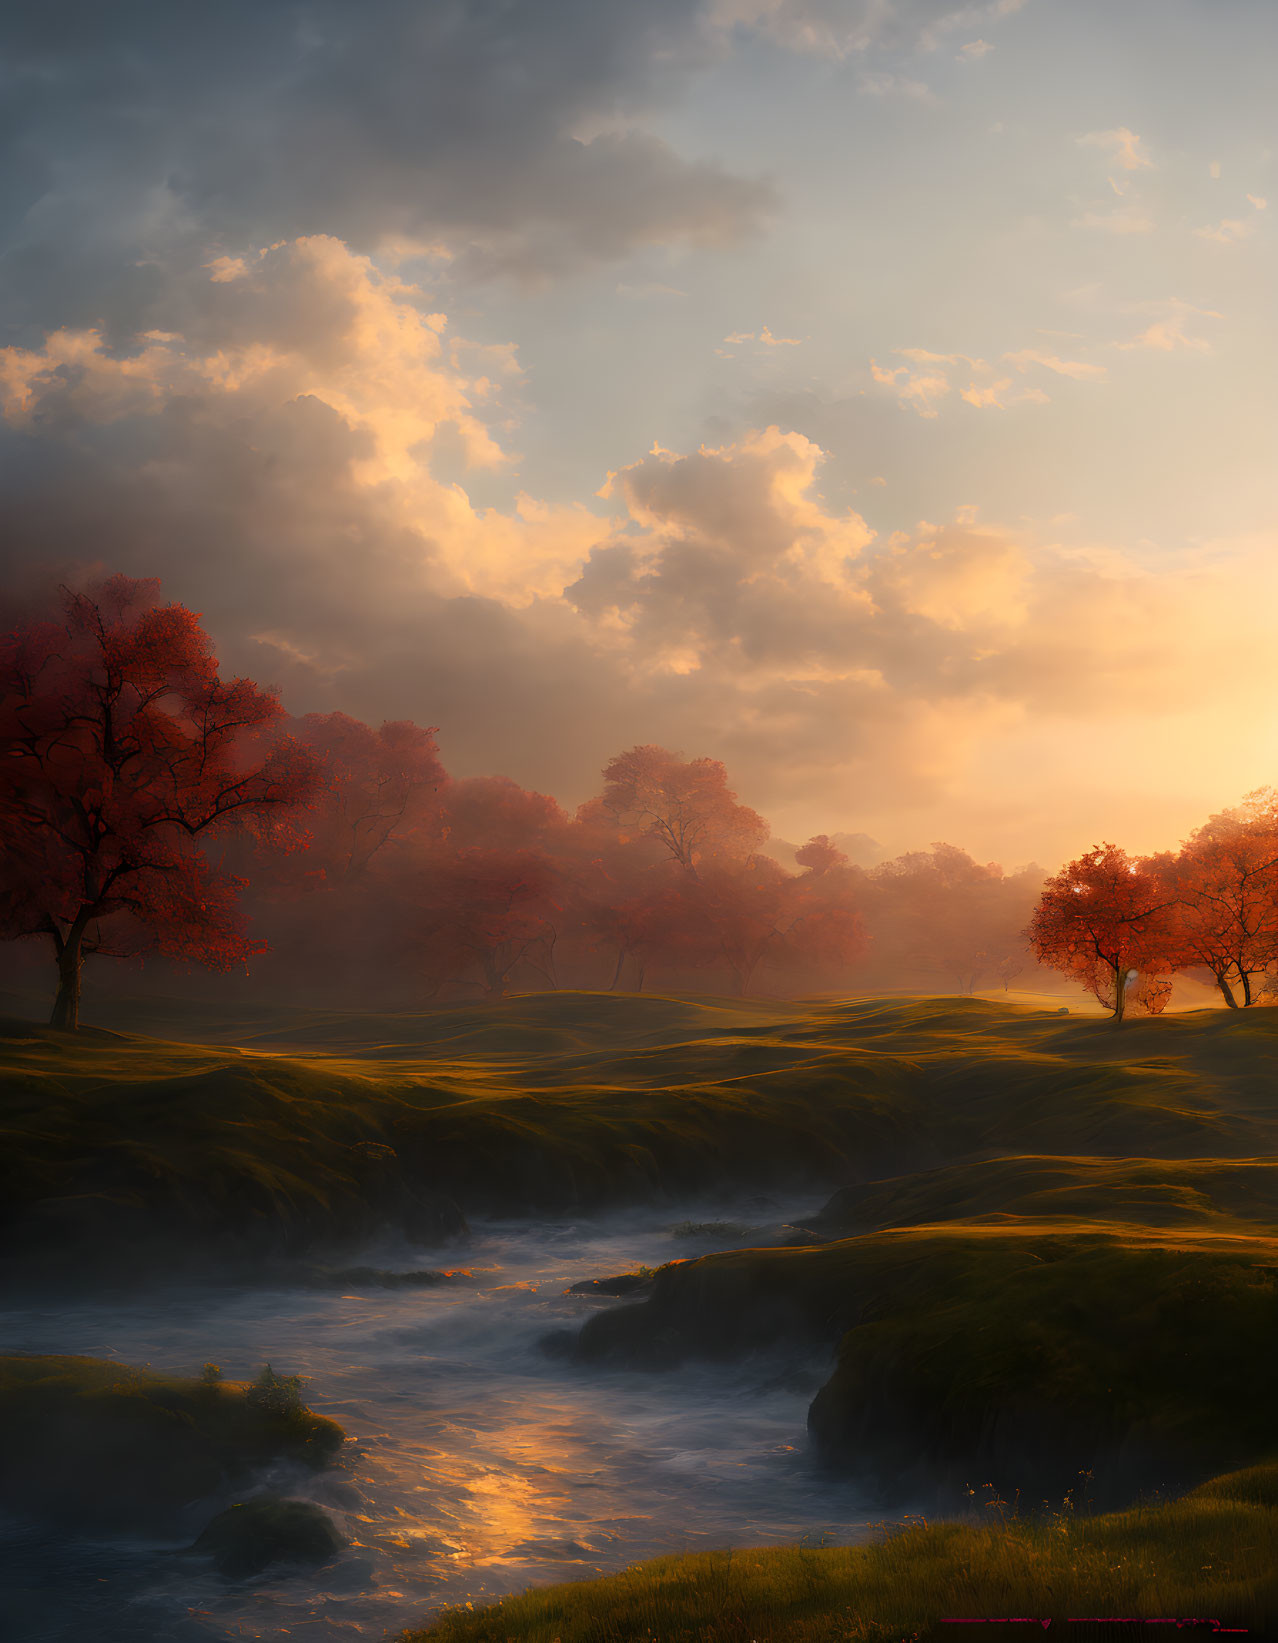 Tranquil Sunset Scene: River, Sunlit Clouds, Autumn Trees